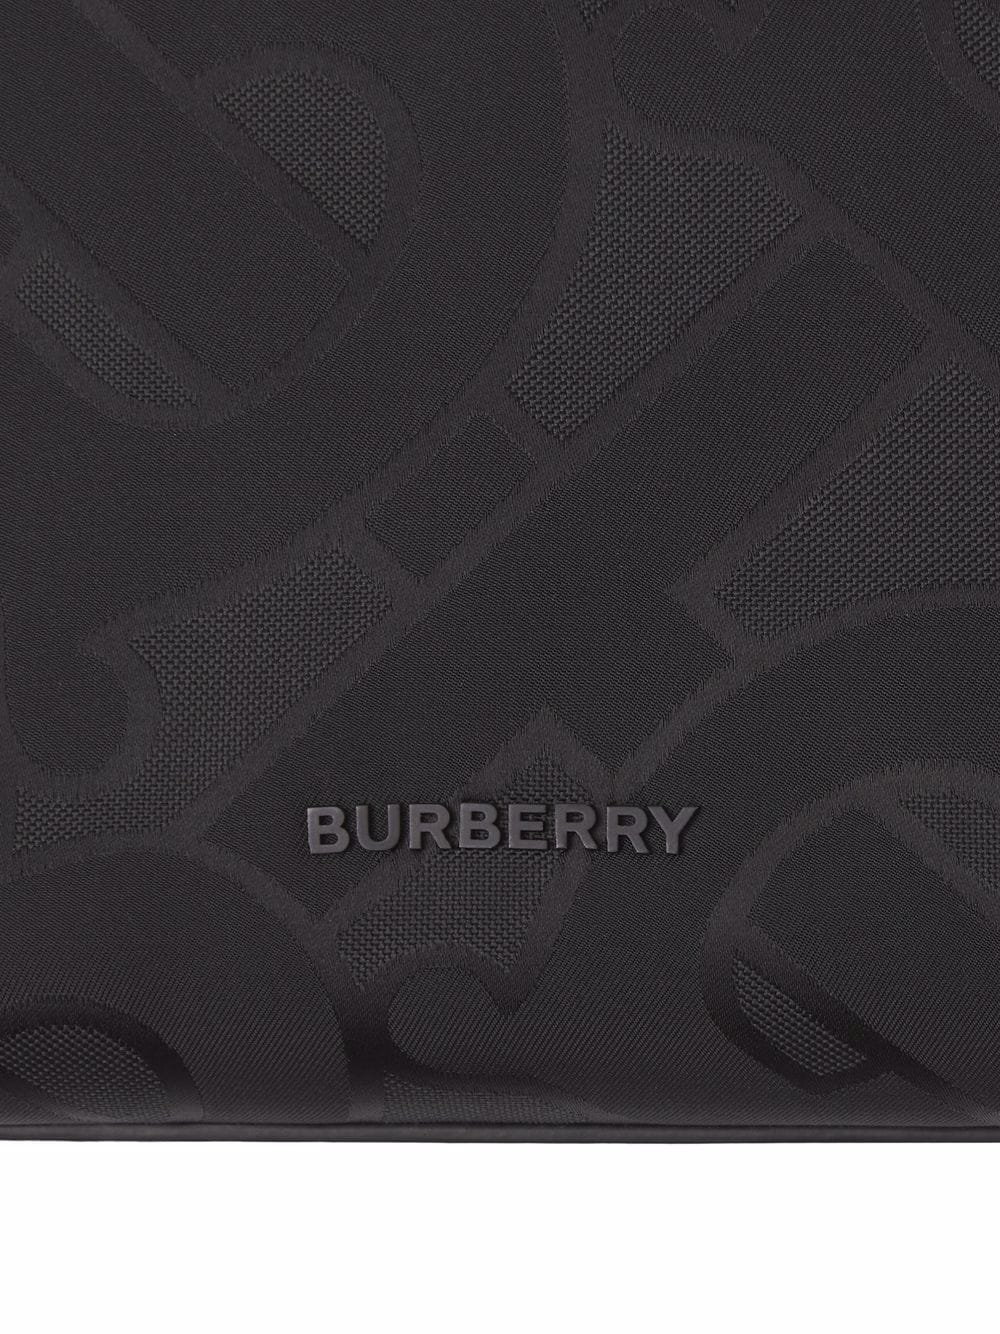 Burberry Pre-Owned TB monogram-pattern Tote Bag - Farfetch